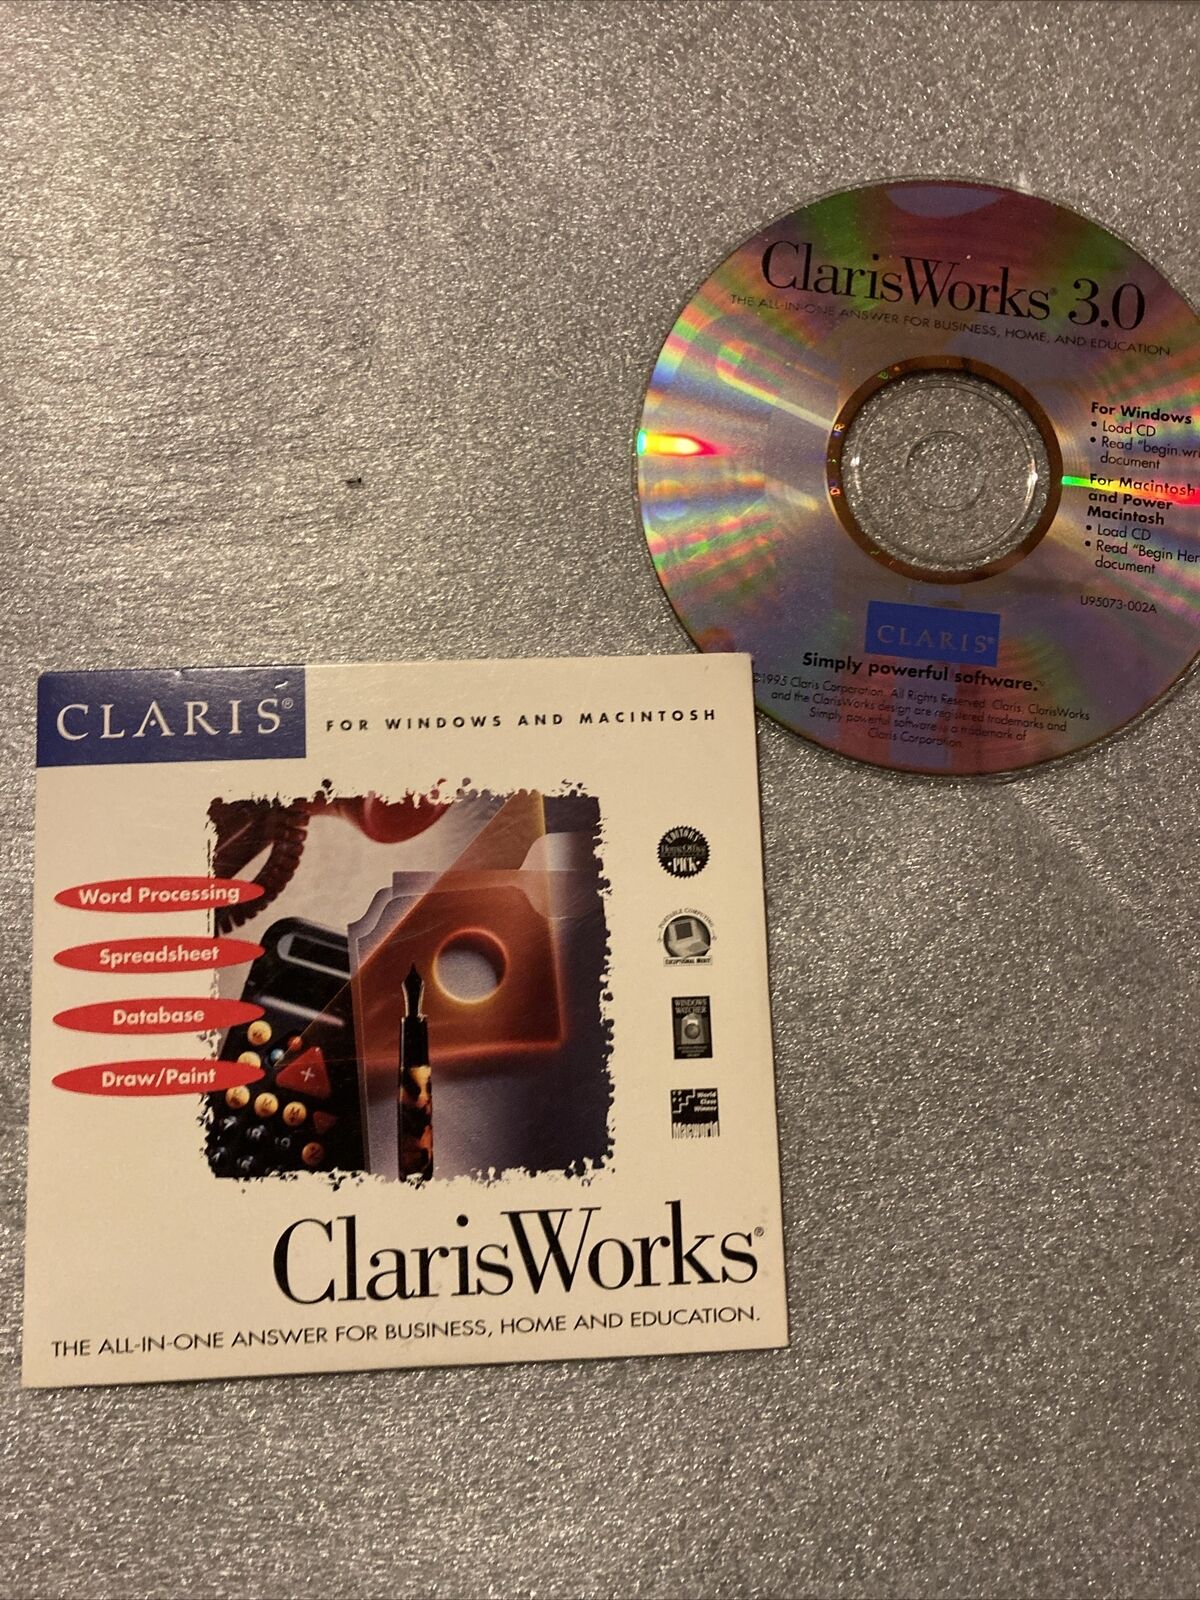 Claris Works 3.0 CD-ROM ClarisWorks Macintosh Windows PC Vintage software